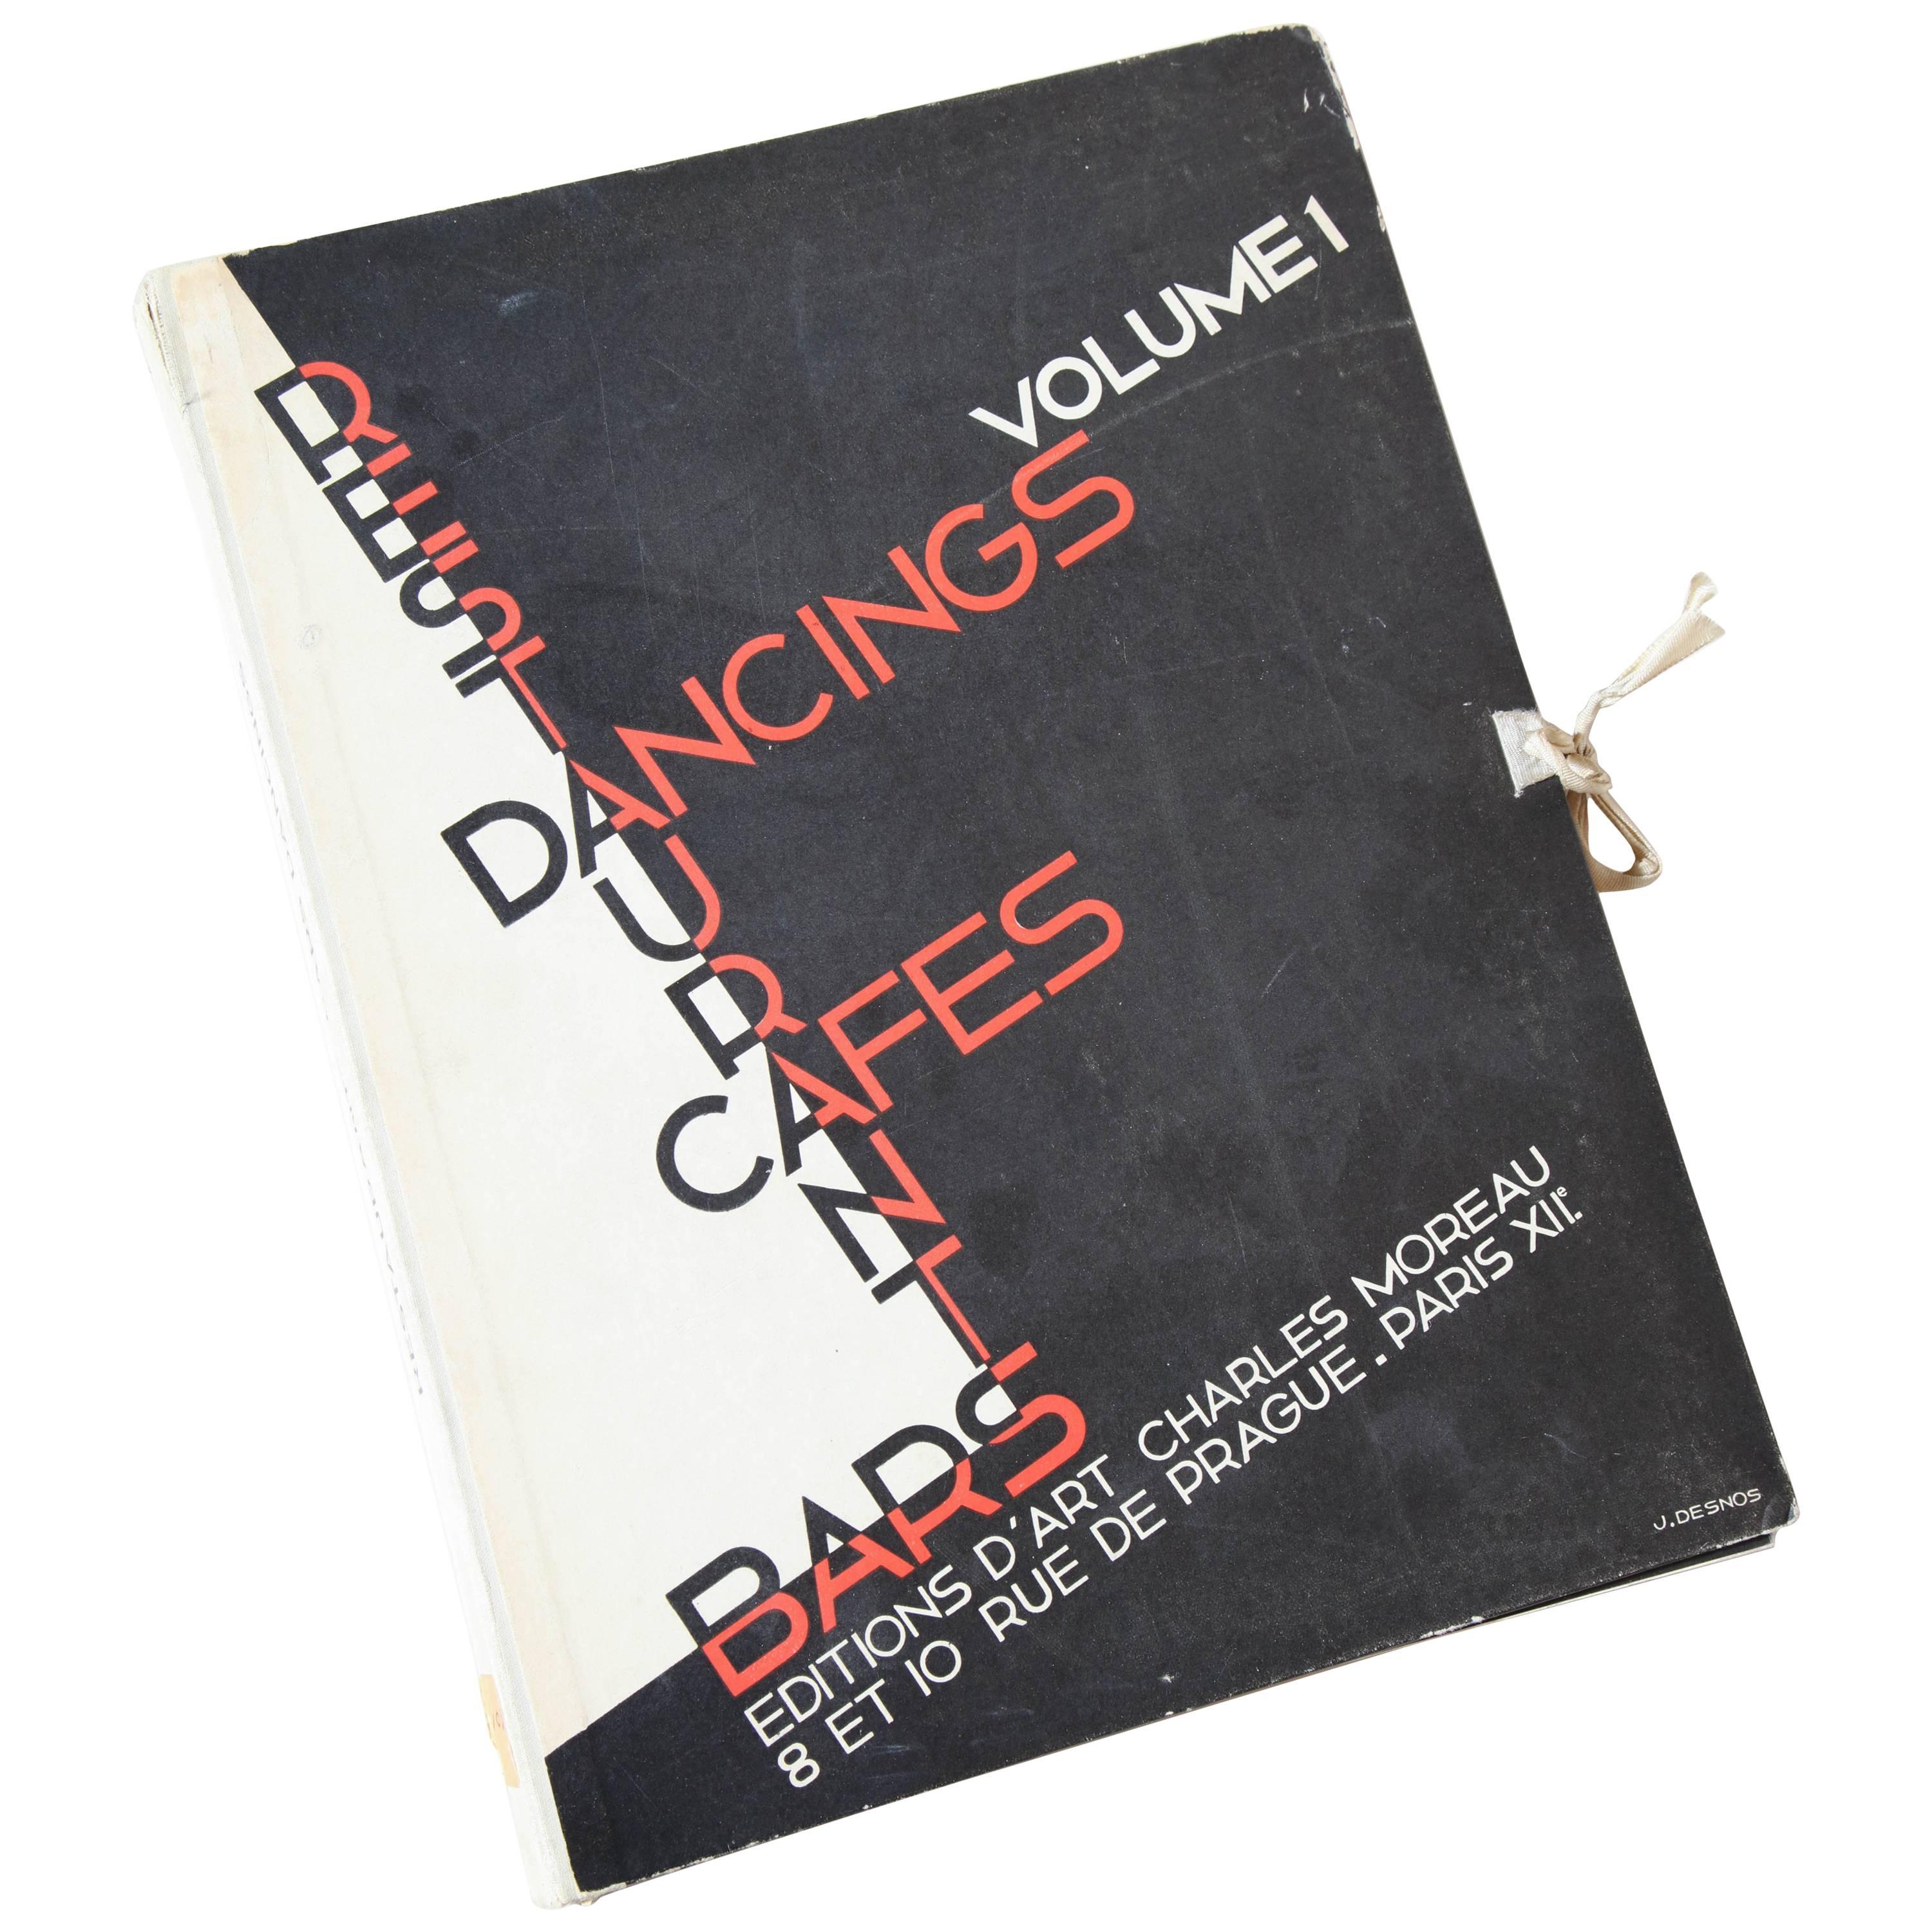 "Dancings Cafes Bars Restaurants Volume 1" For Sale